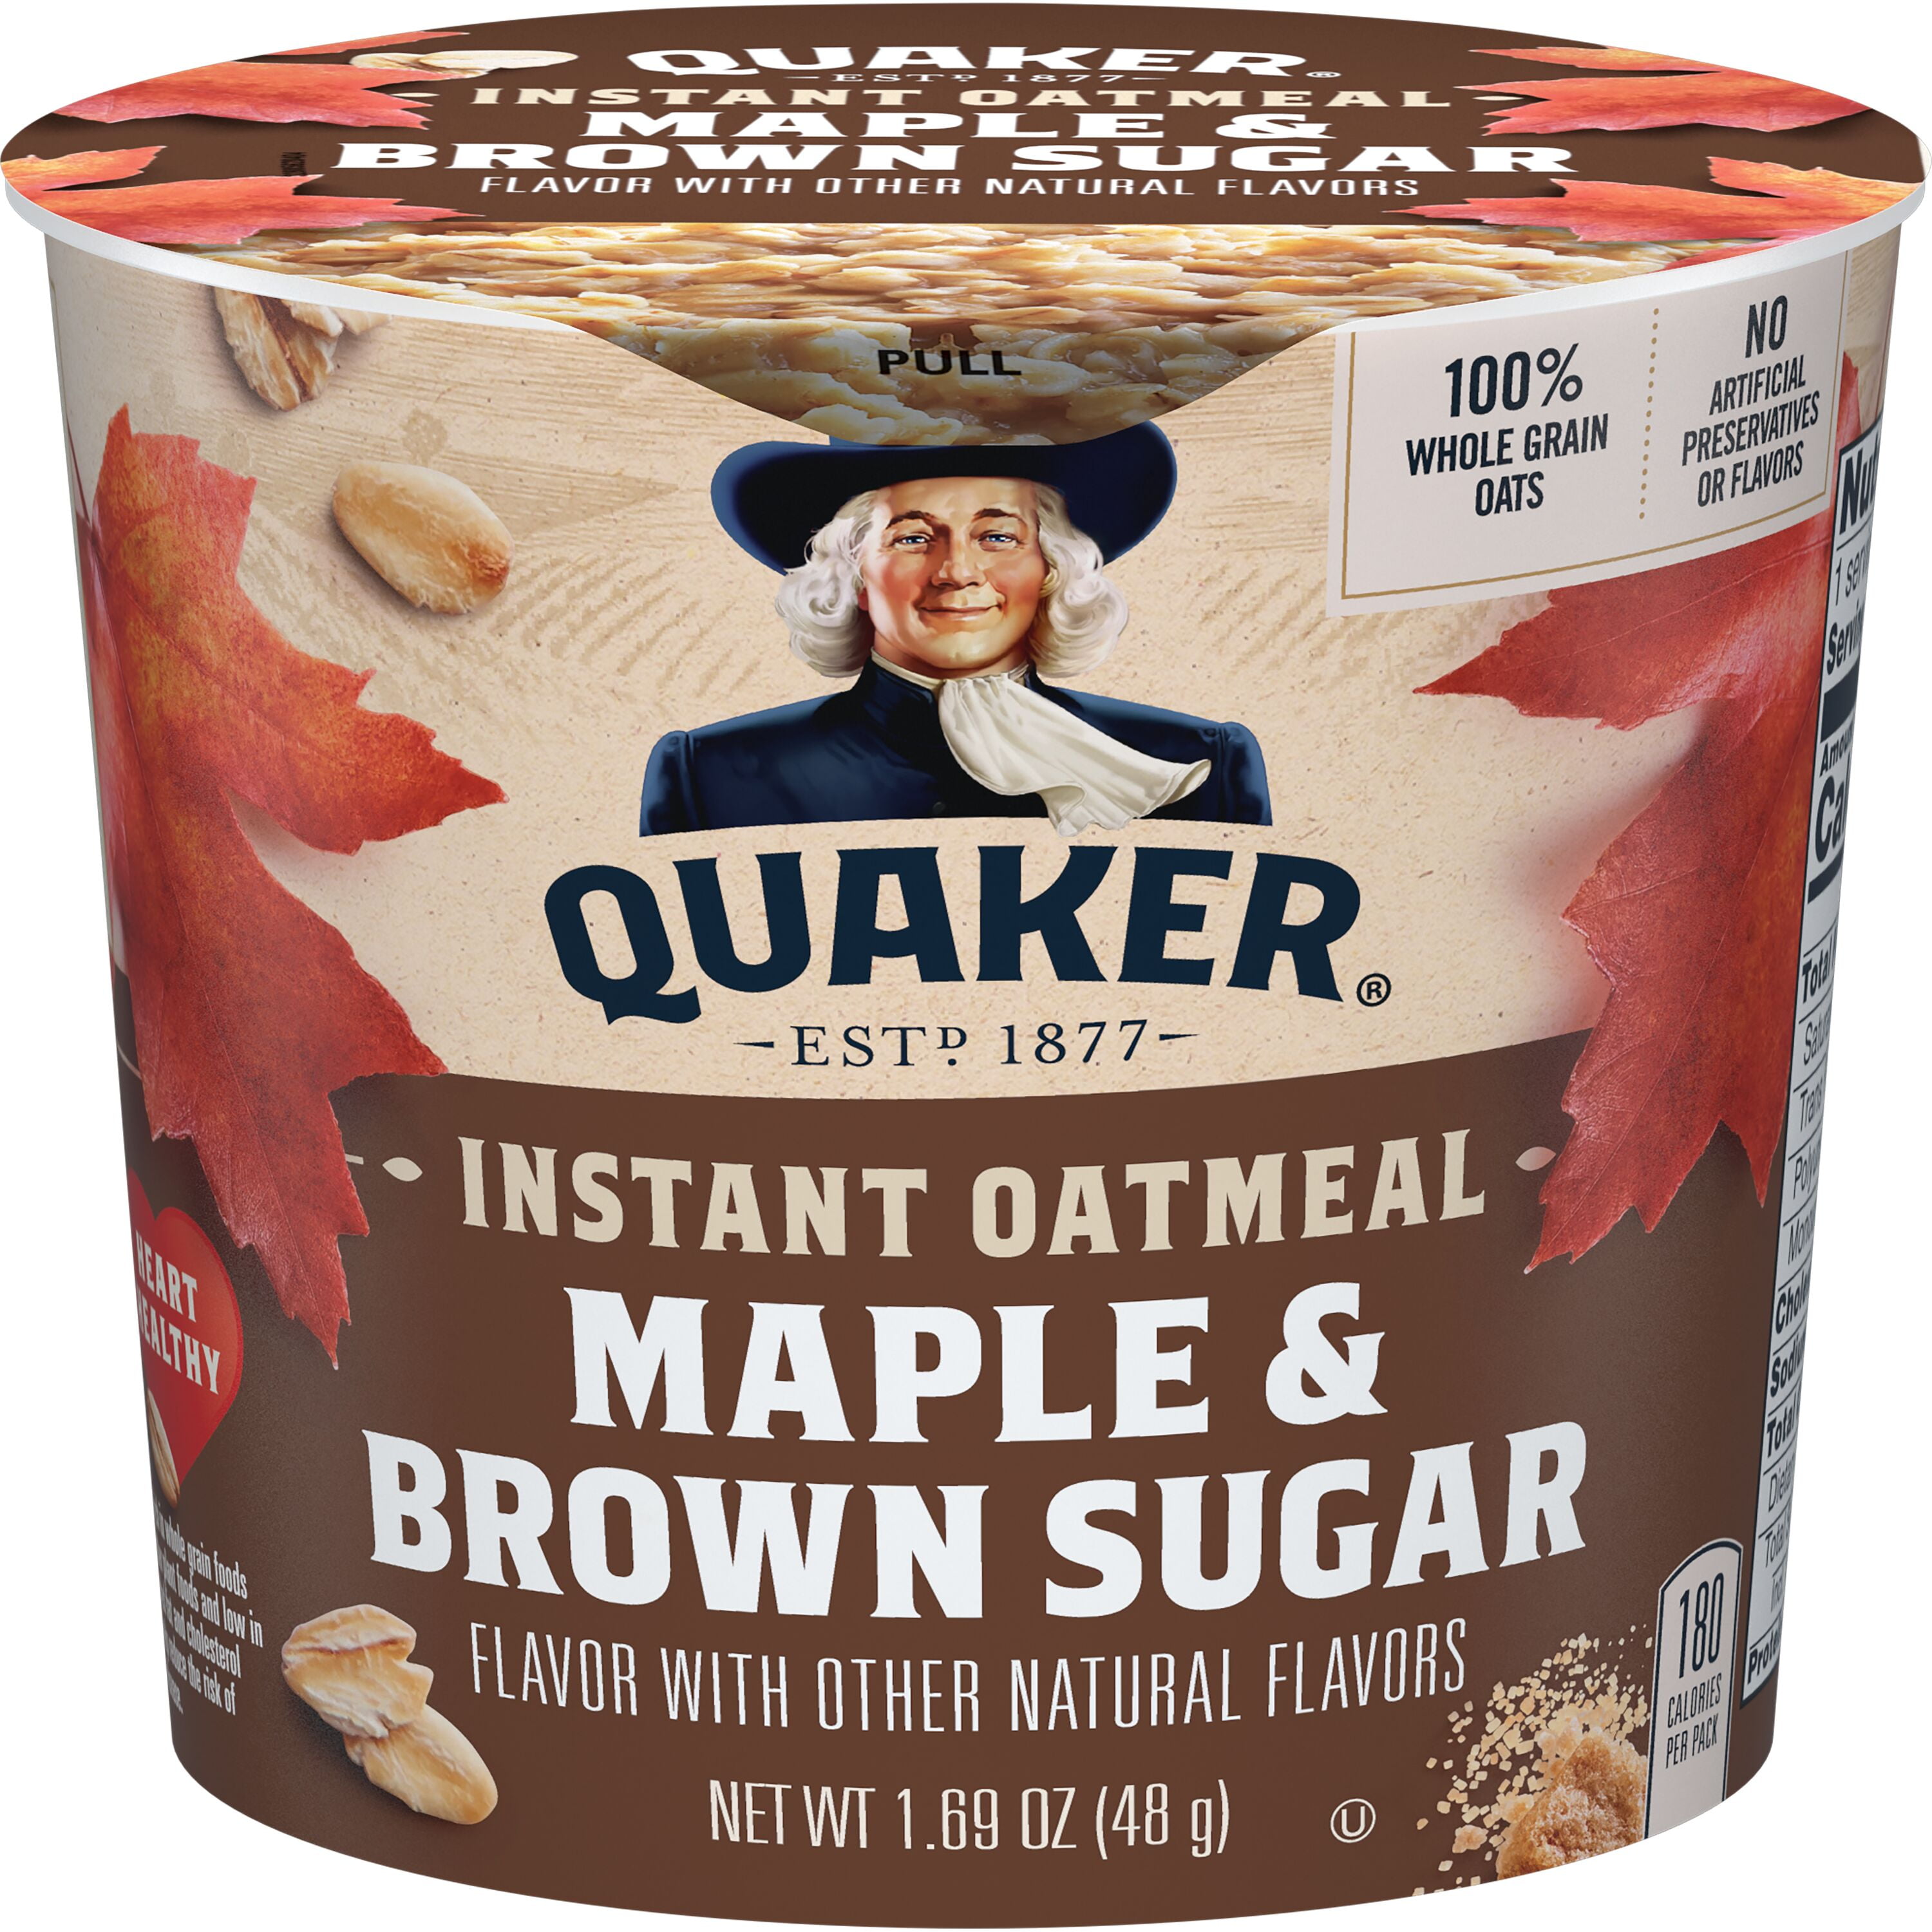 Quaker, Instant Oatmeal, Maple & Brown Sugar, 1.69 oz